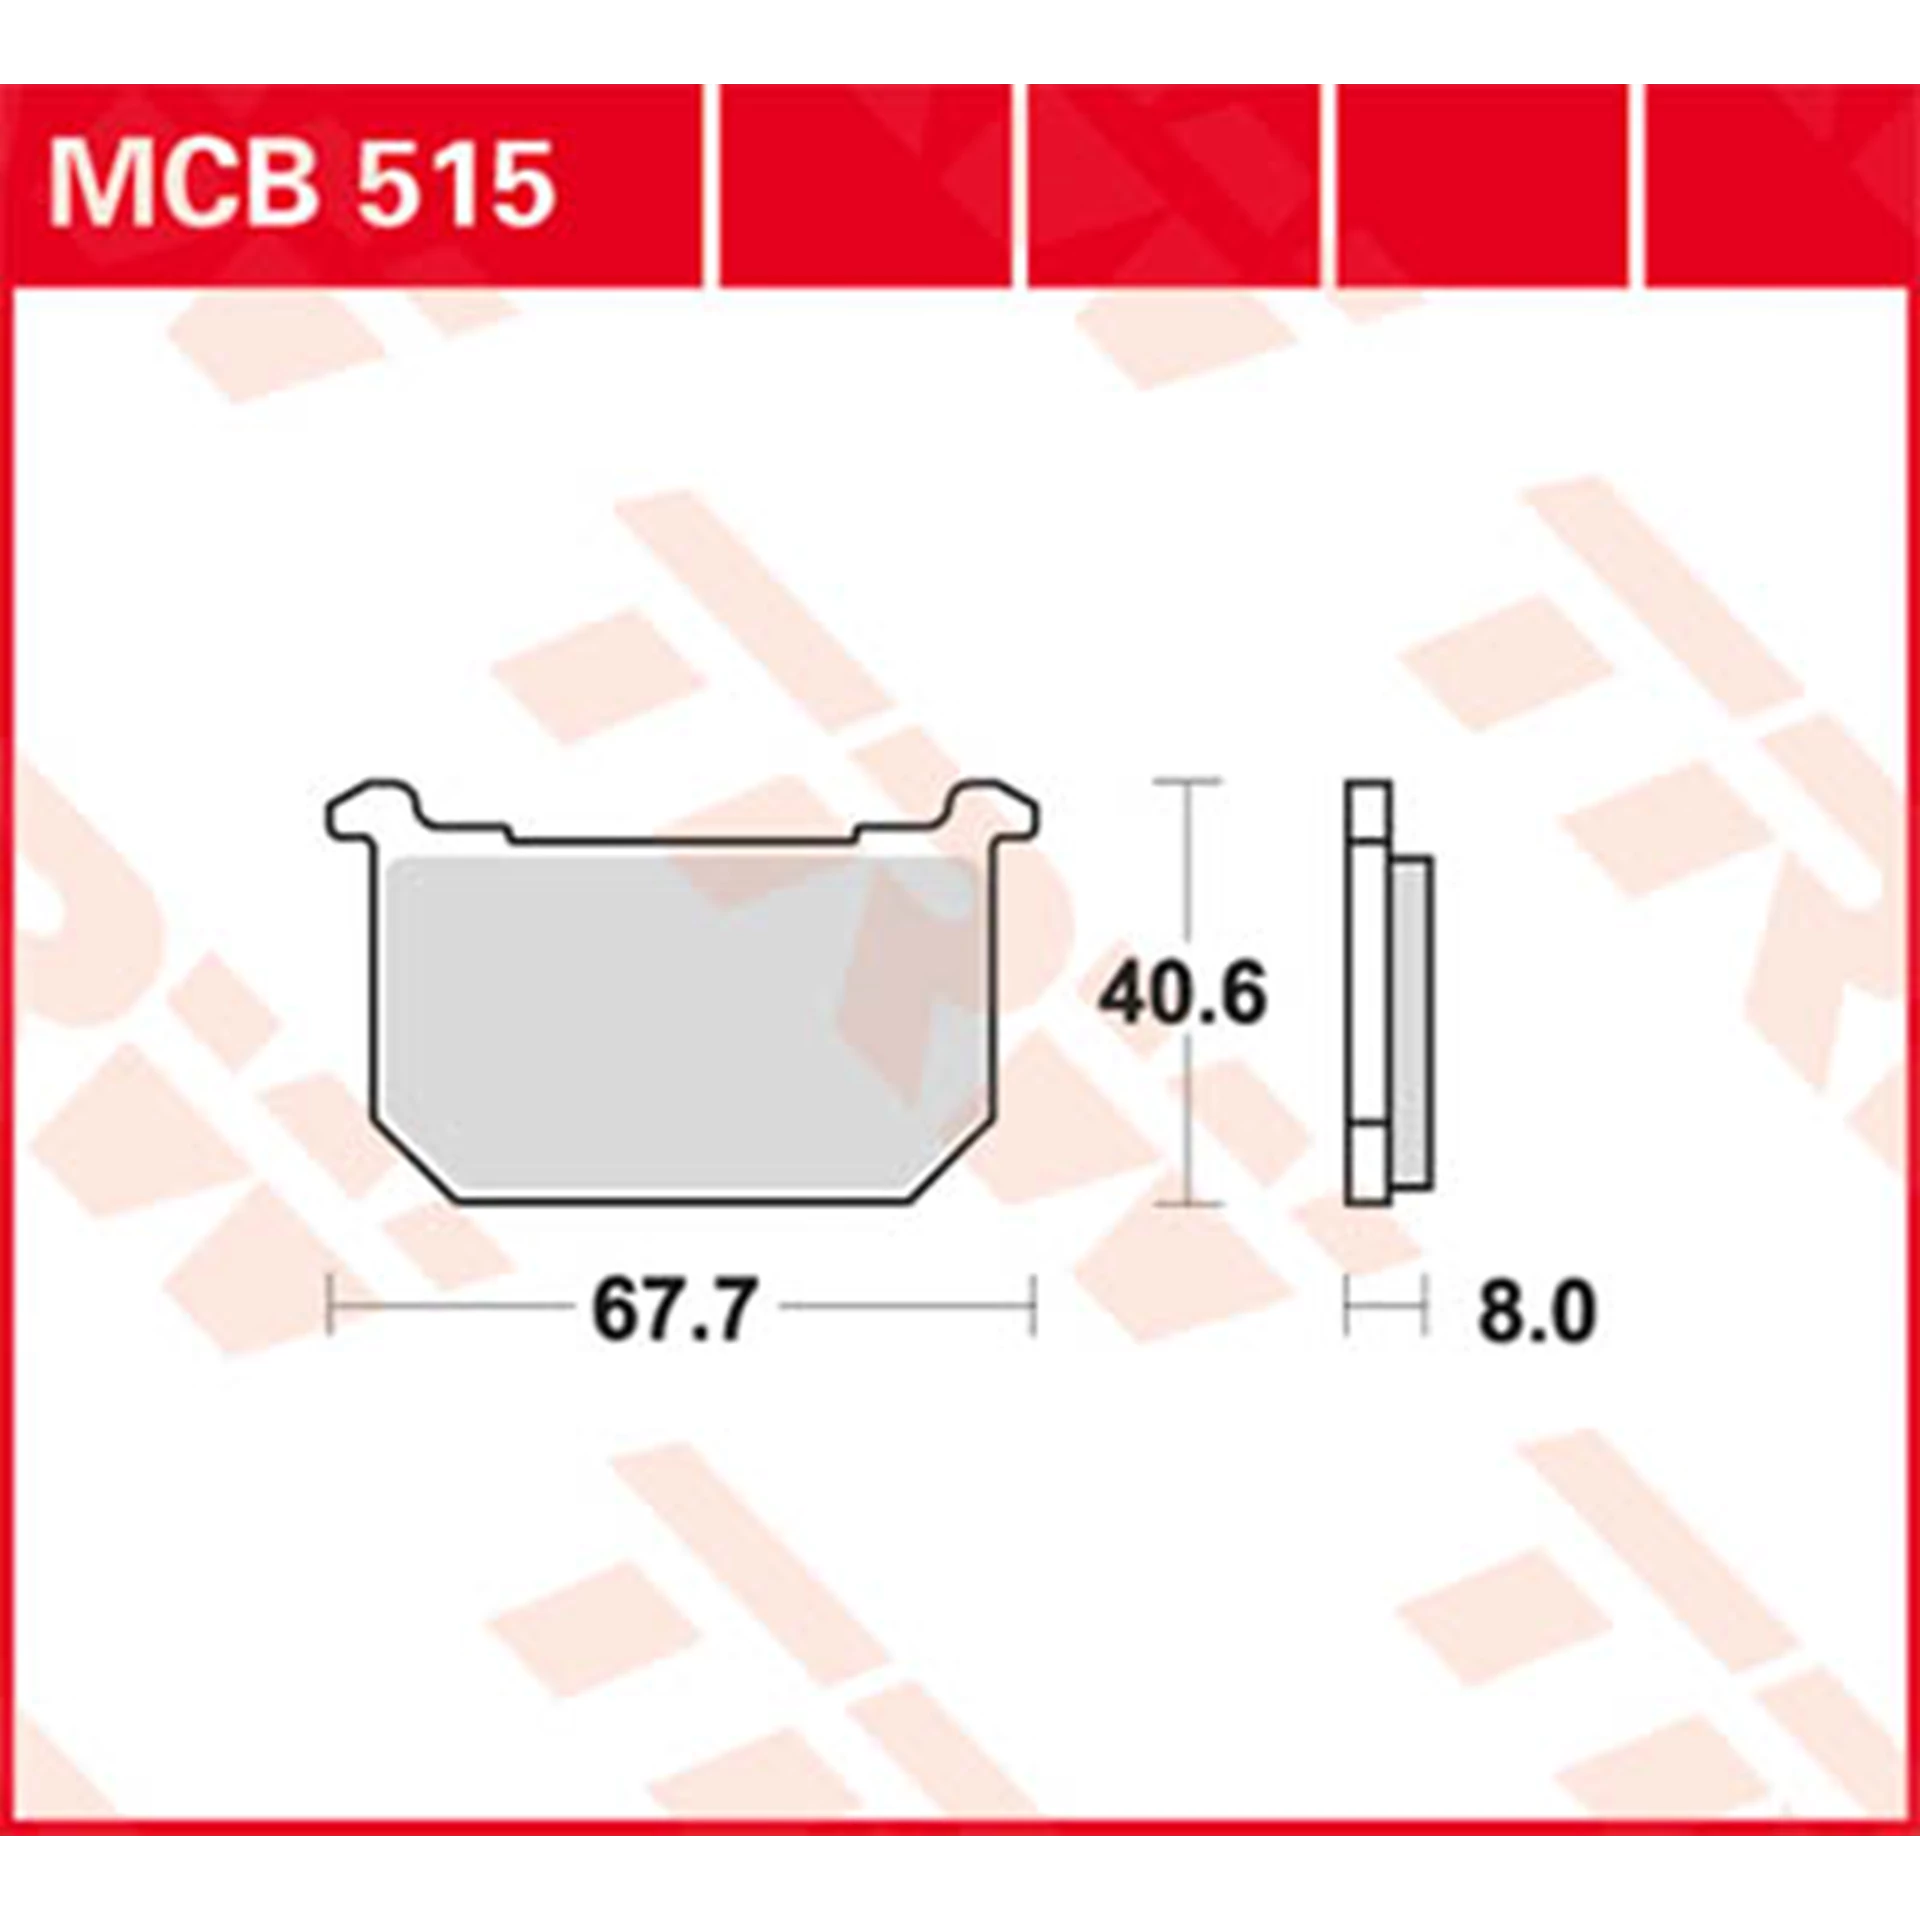 MCB515.jpg